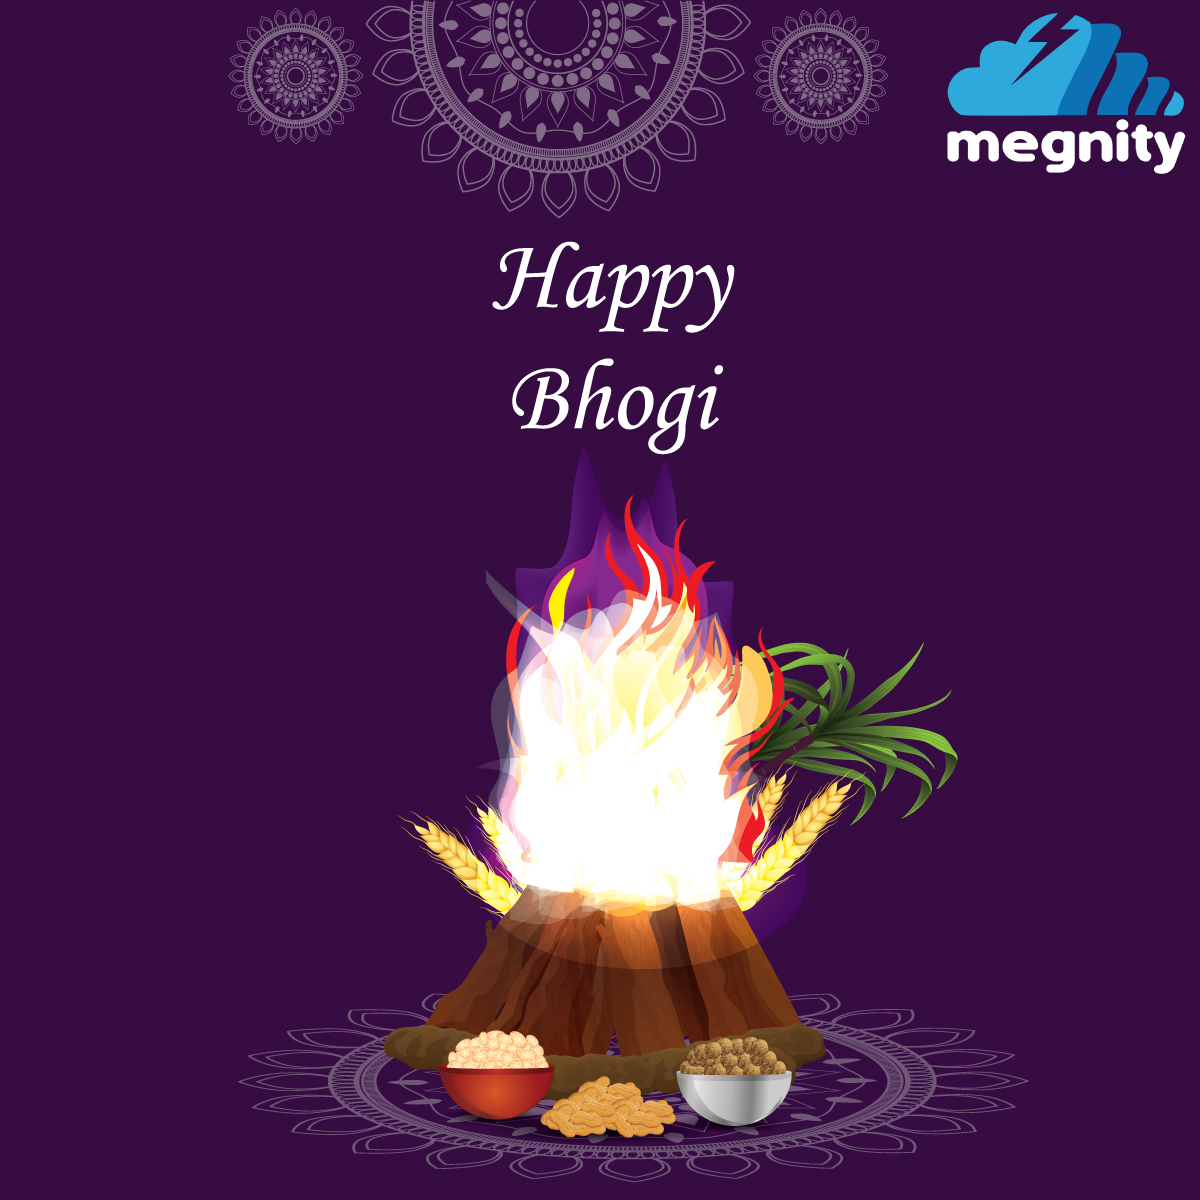 🔥 Wishing everyone a Happy Bhogi! 🔥

#HappyBhogi #HarvestFestival #FestiveCelebration #Prosperity #NewBeginnings